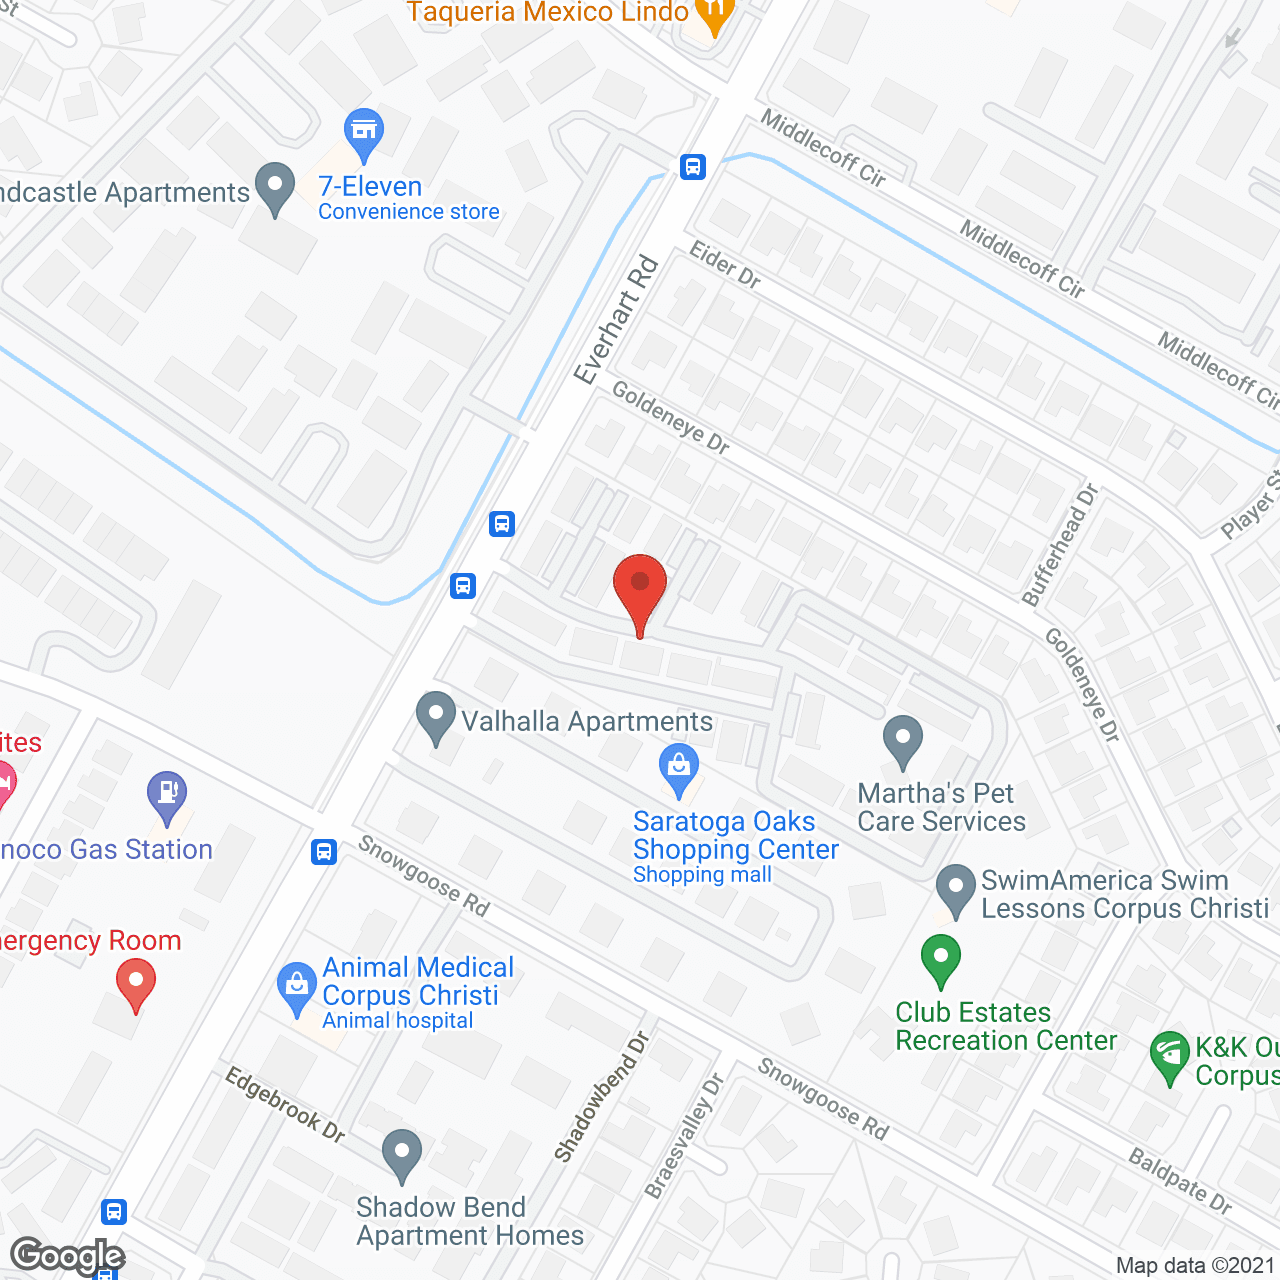 Elan Corpus Christi in google map